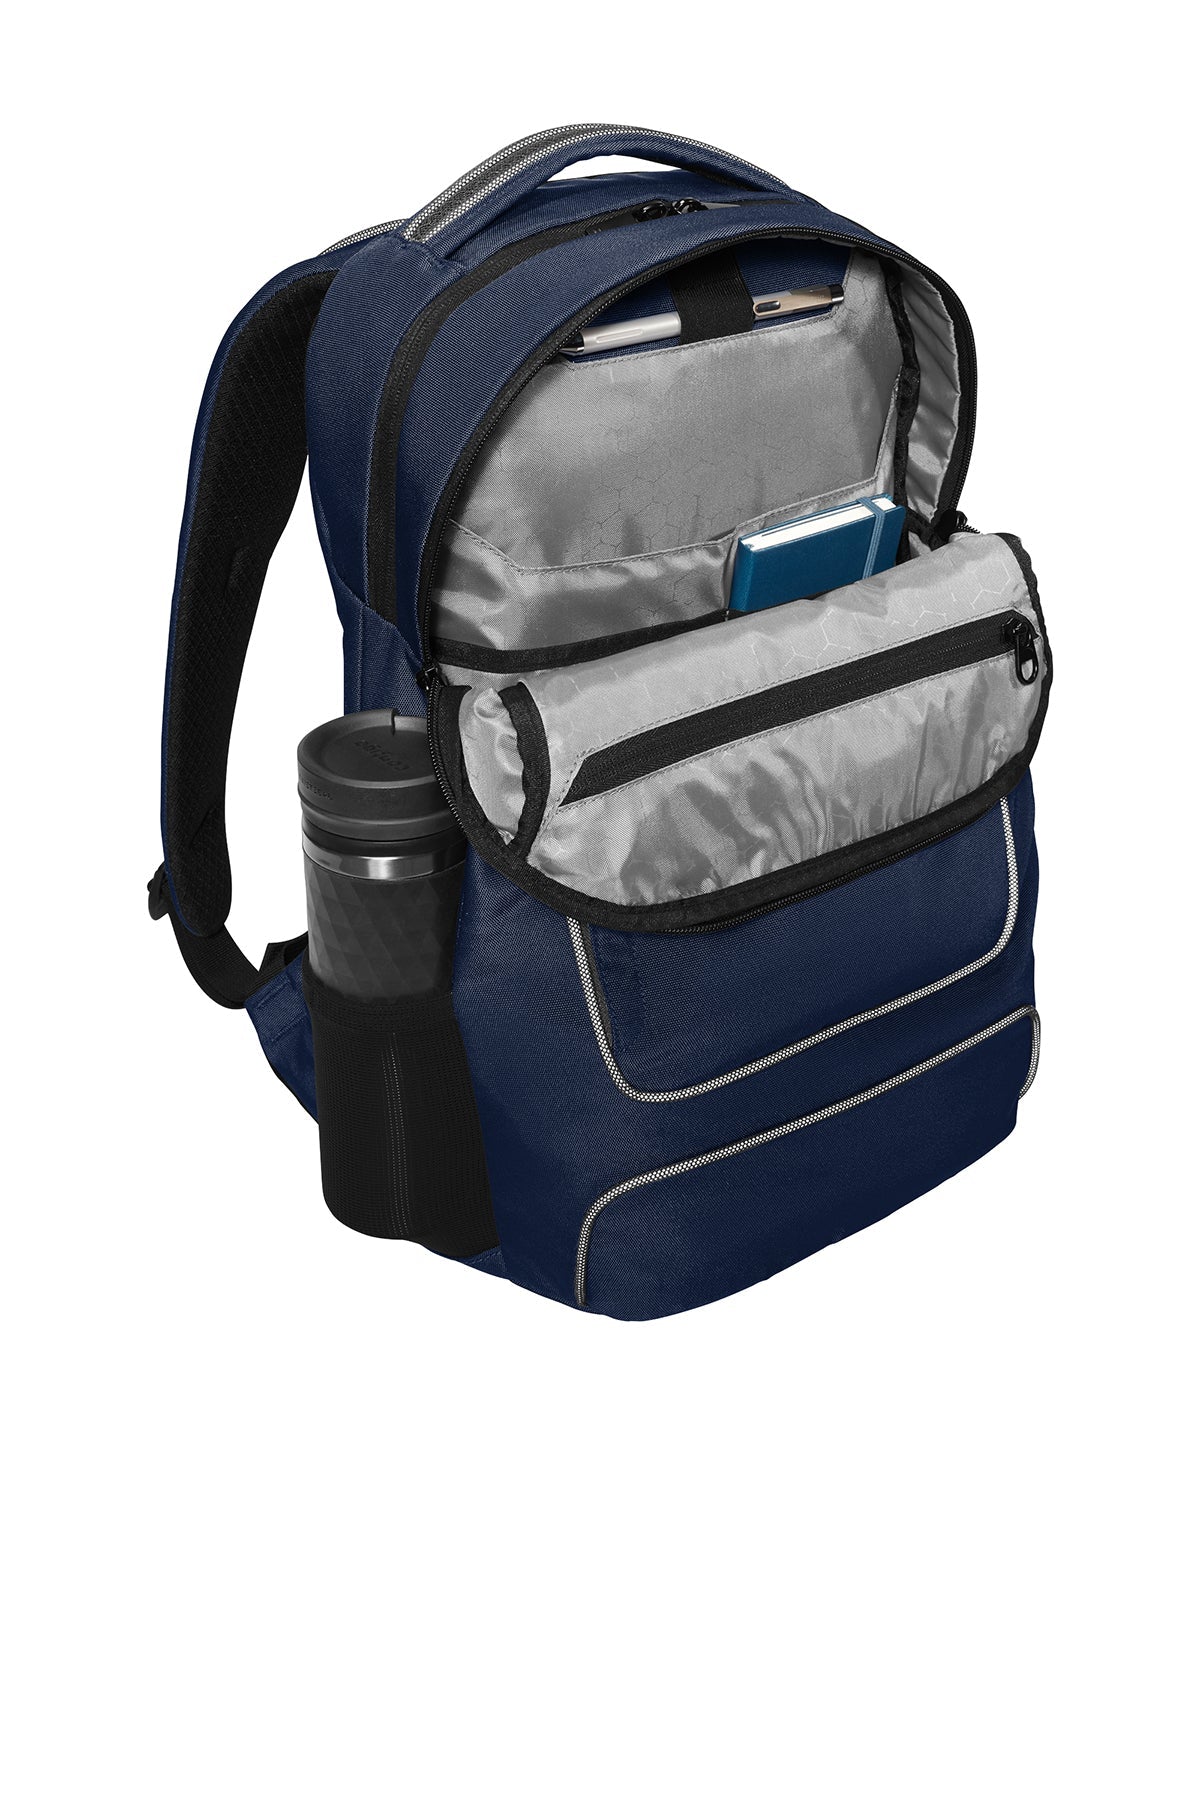 OGIO Range Customzied Backpacks, River Blue Navy